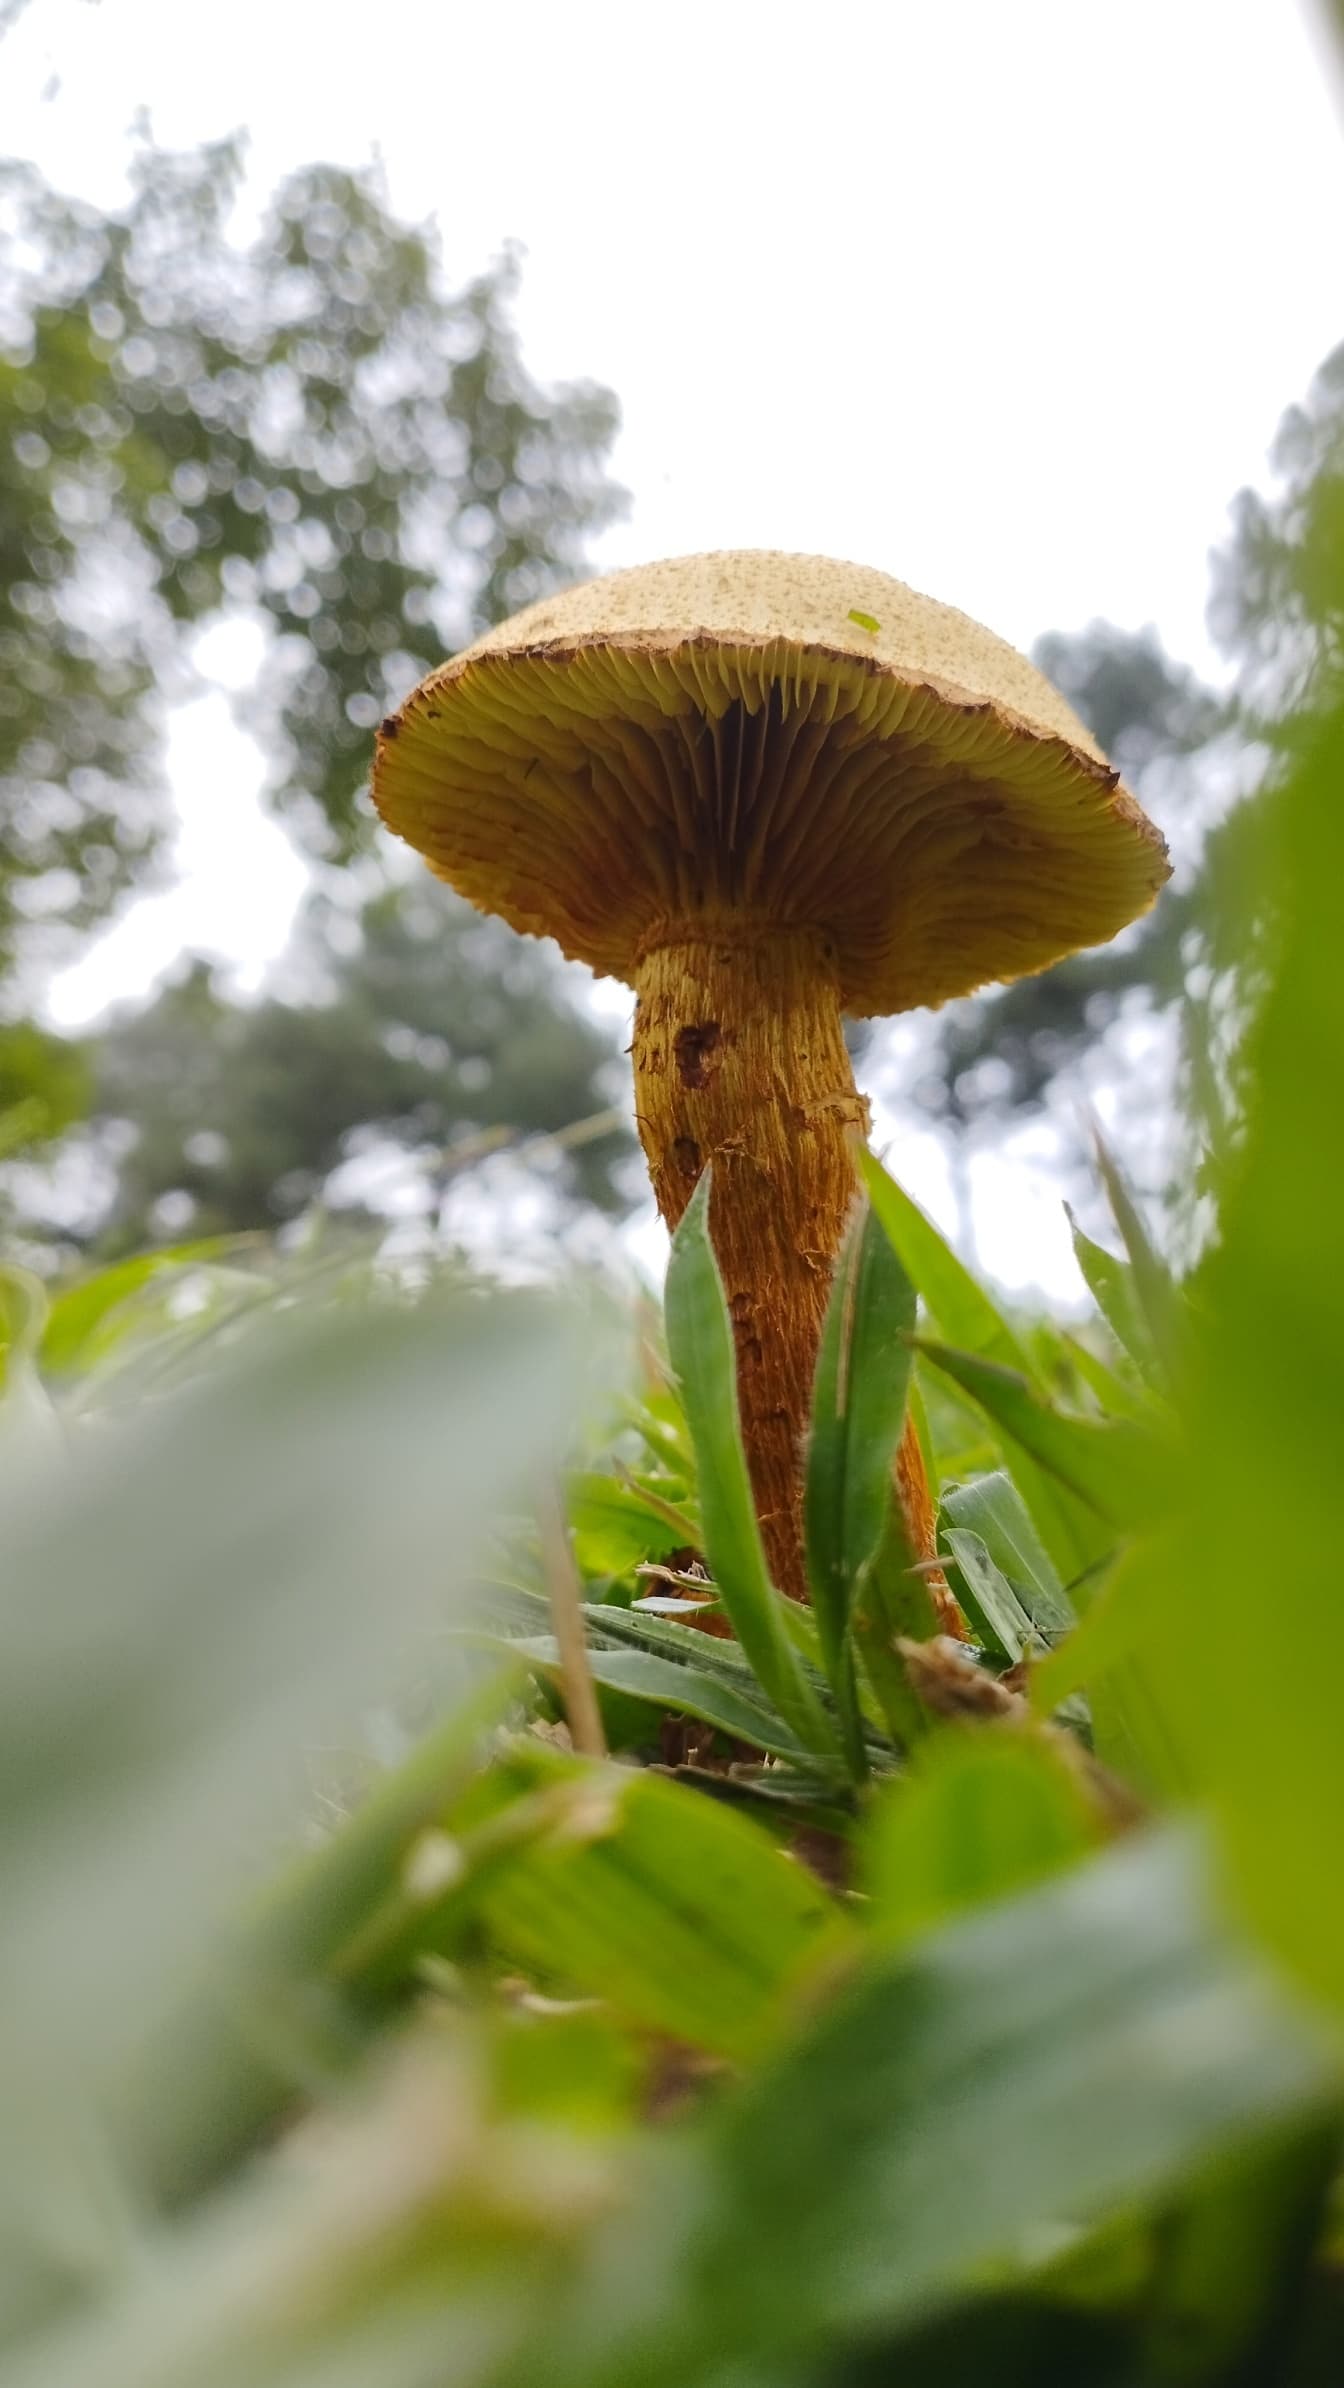 Foto close-up jamur coklat kekuningan yang tumbuh di rumput